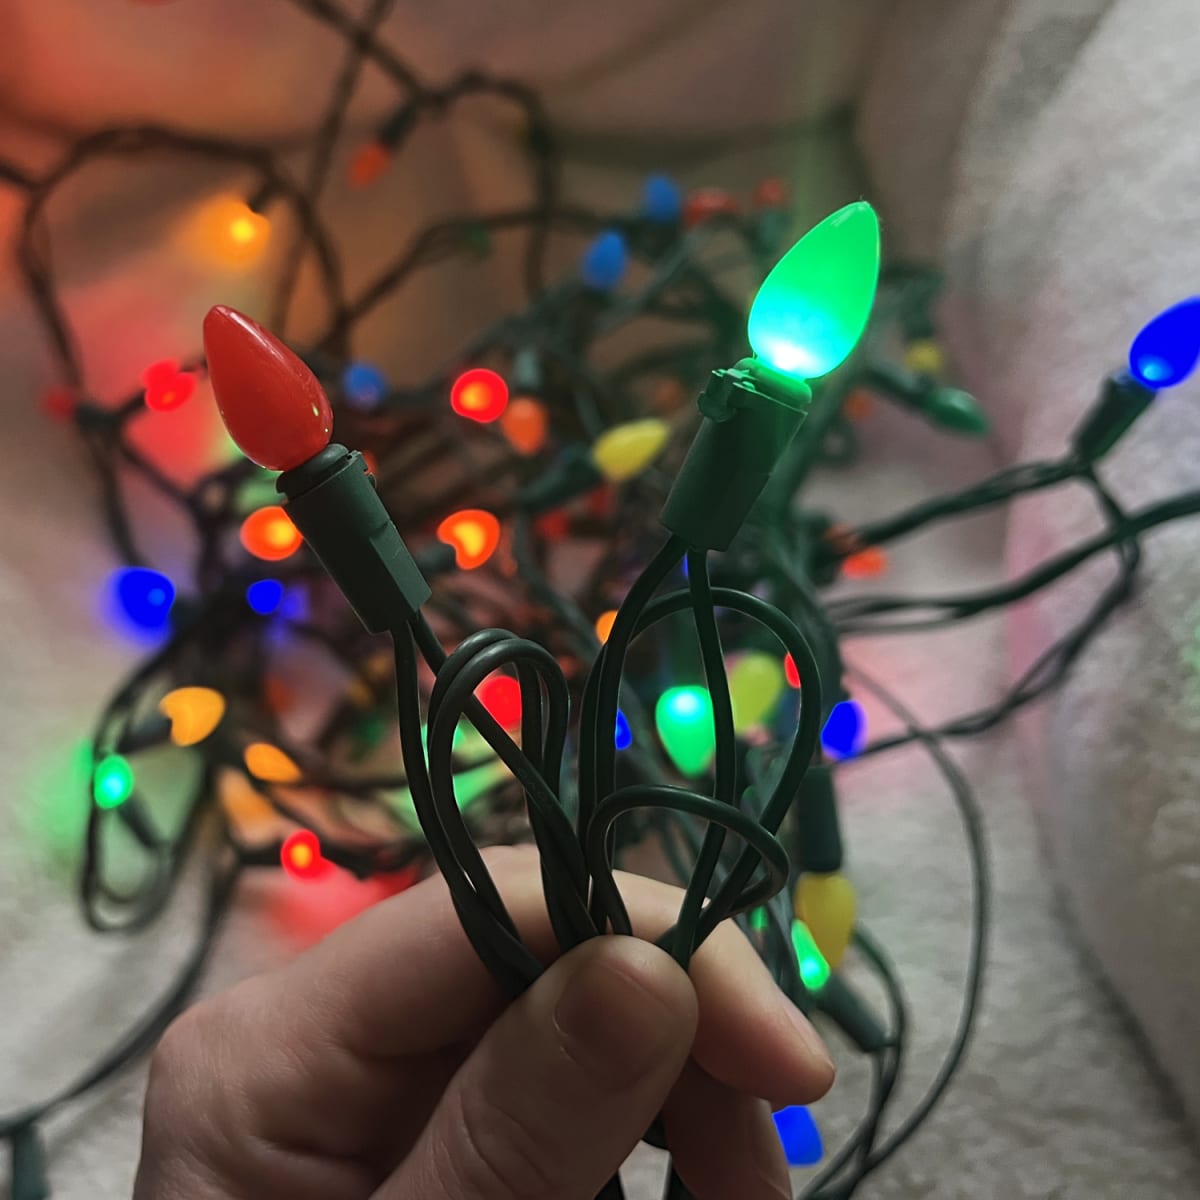 LED Keeper, LED Christmas Light Repair Tool - The Christmas Light